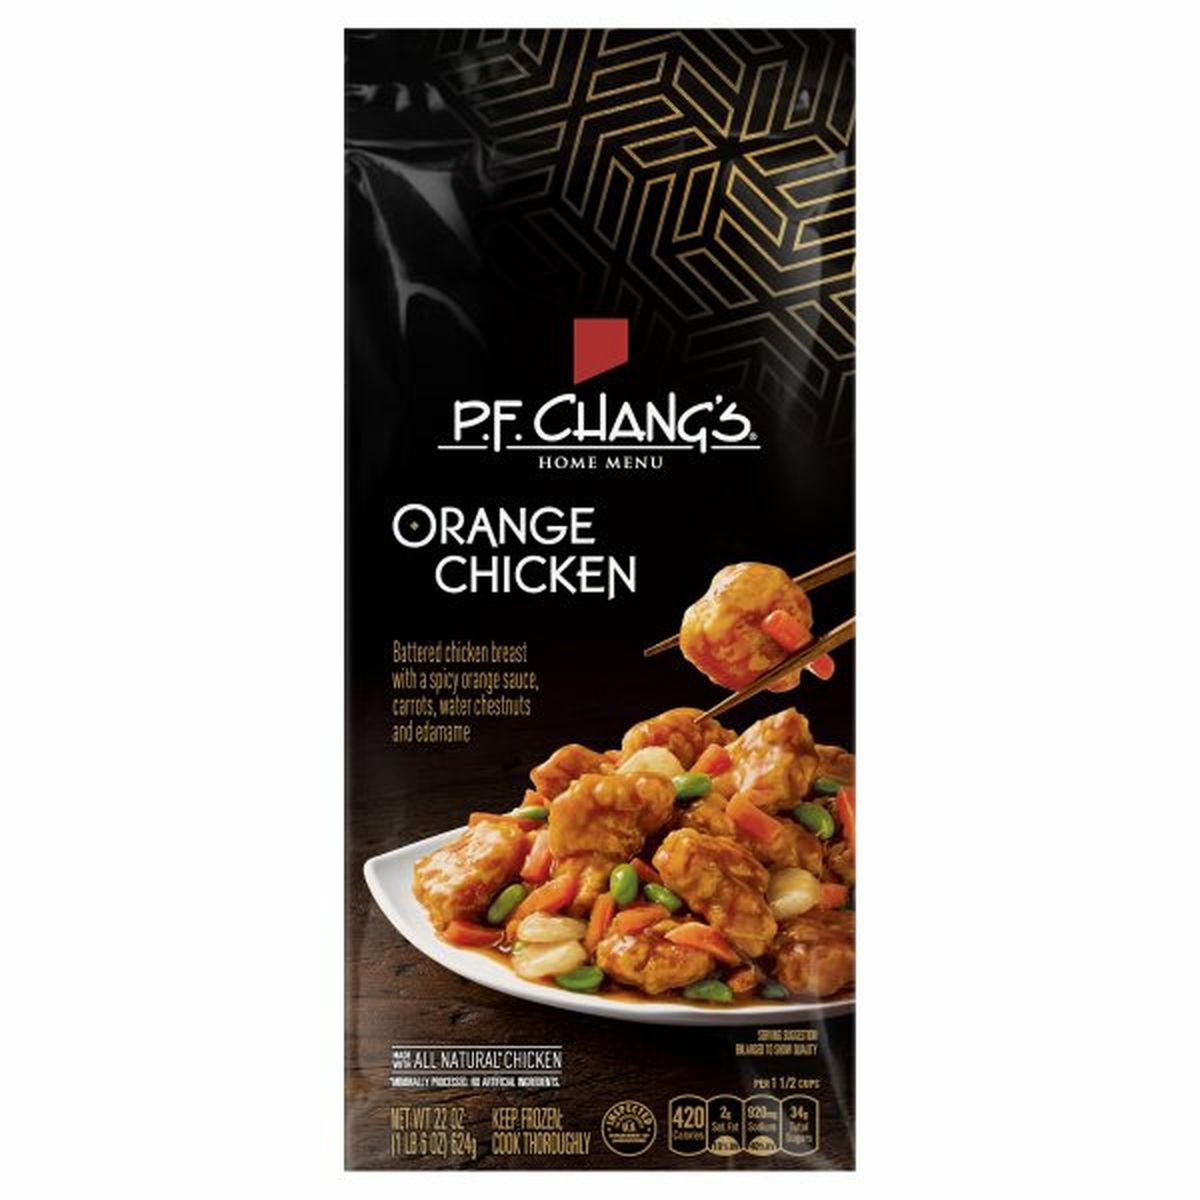 Calories in P.F. Chang's Orange Chicken